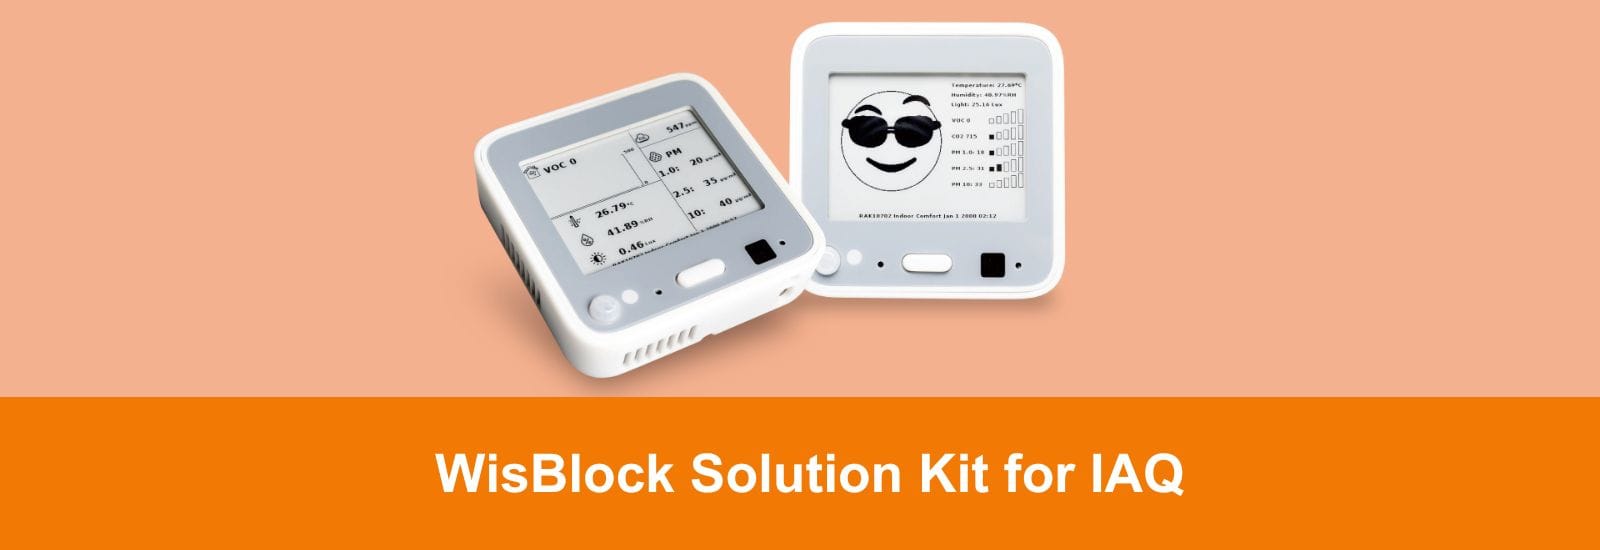 WisBlock Solution Kit for IAQ